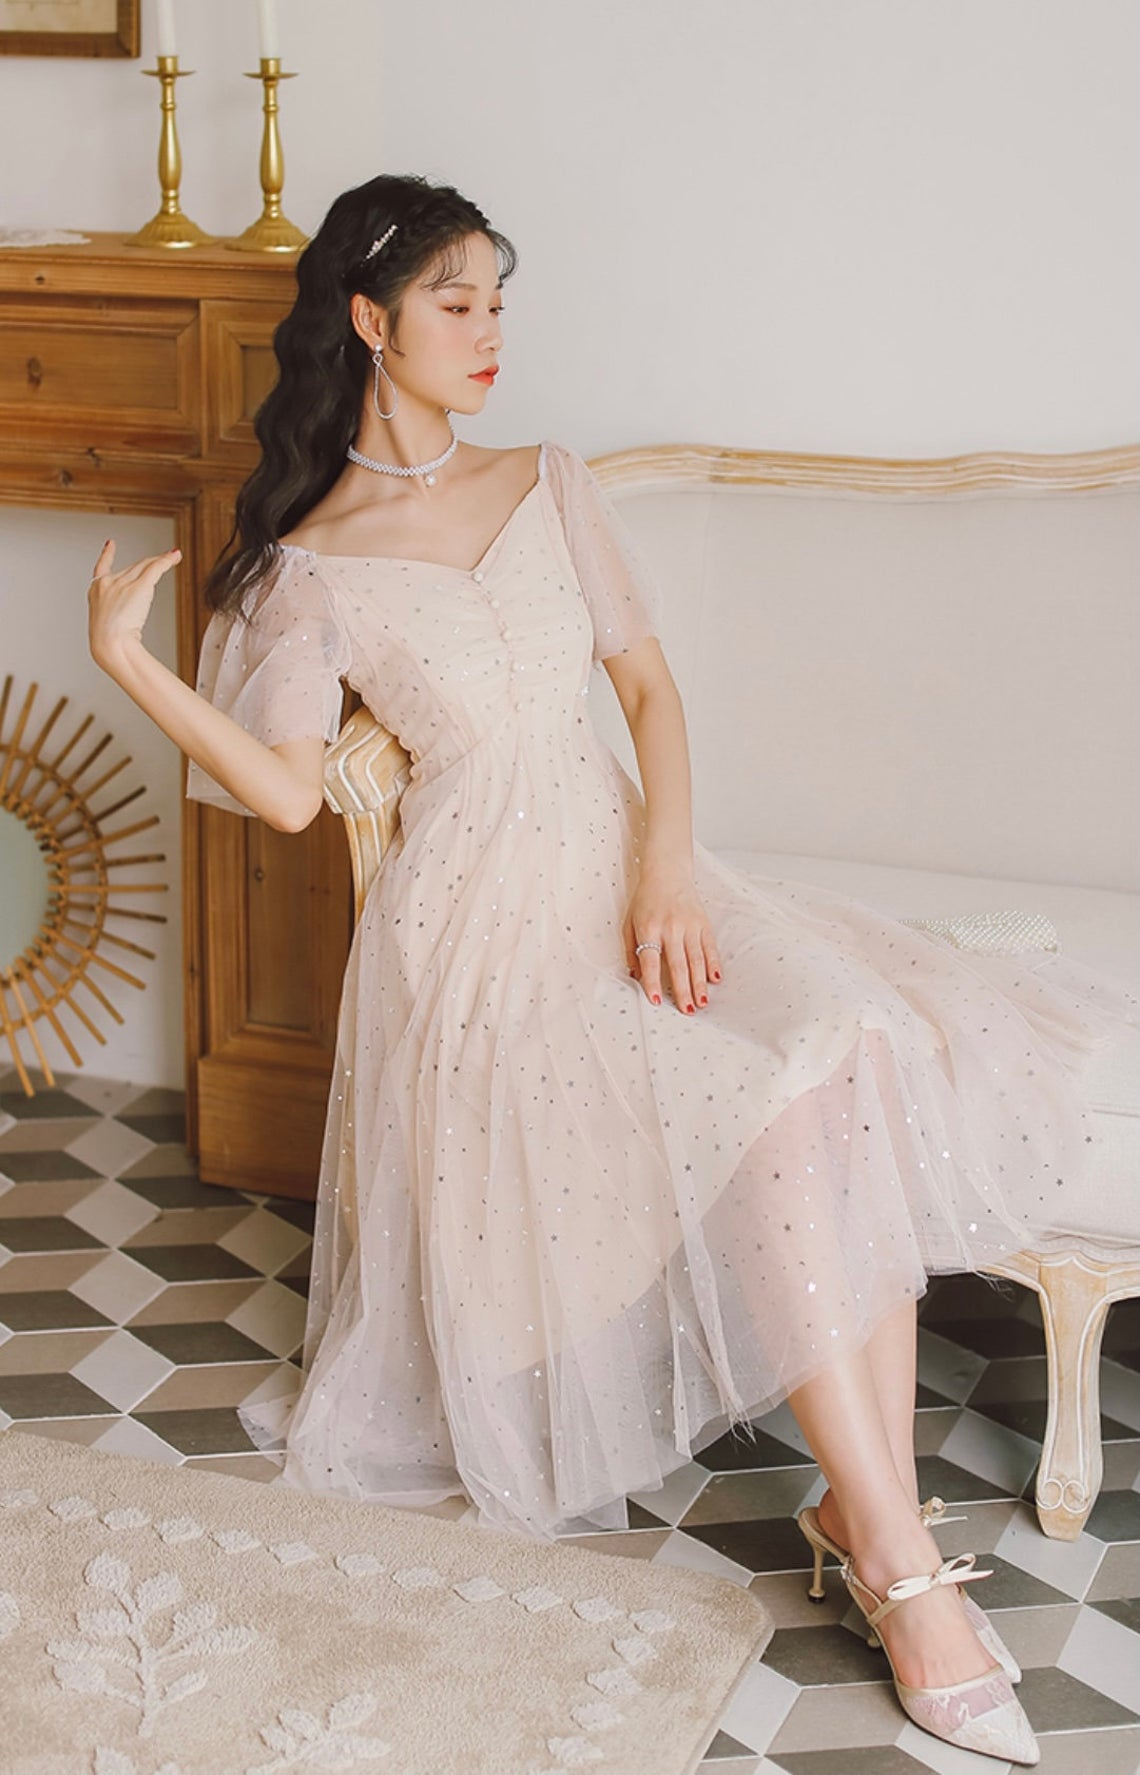 Princess Wedding Dresses: 18 Styles For FairyTale Celebration | Ball gowns,  Wedding dress guide, Dream wedding dresses